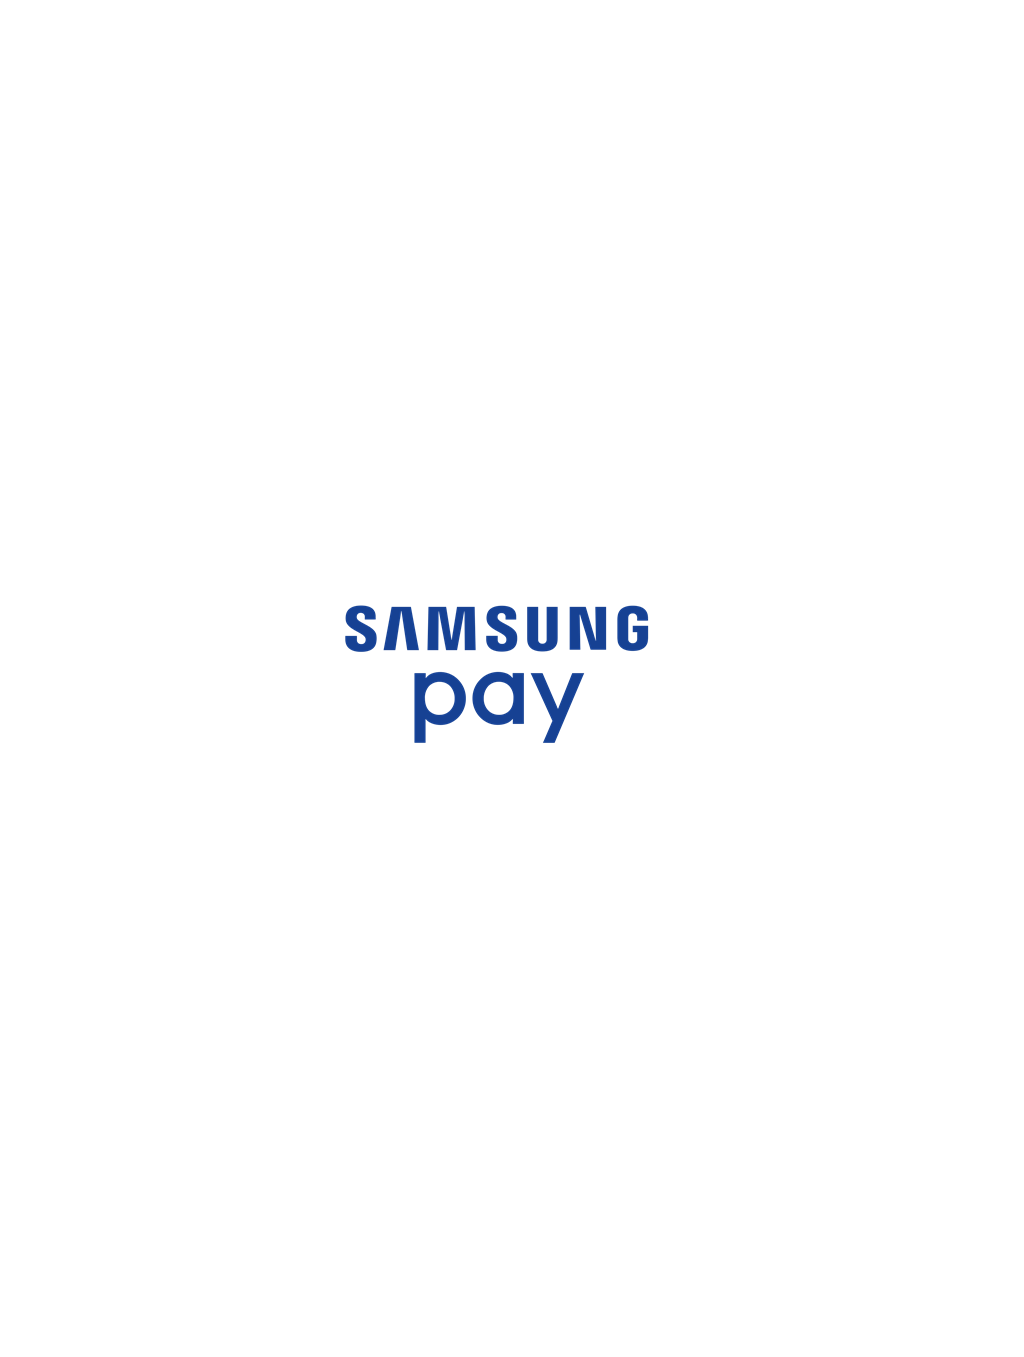 Samsung Pay logotype, transparent .png, medium, large